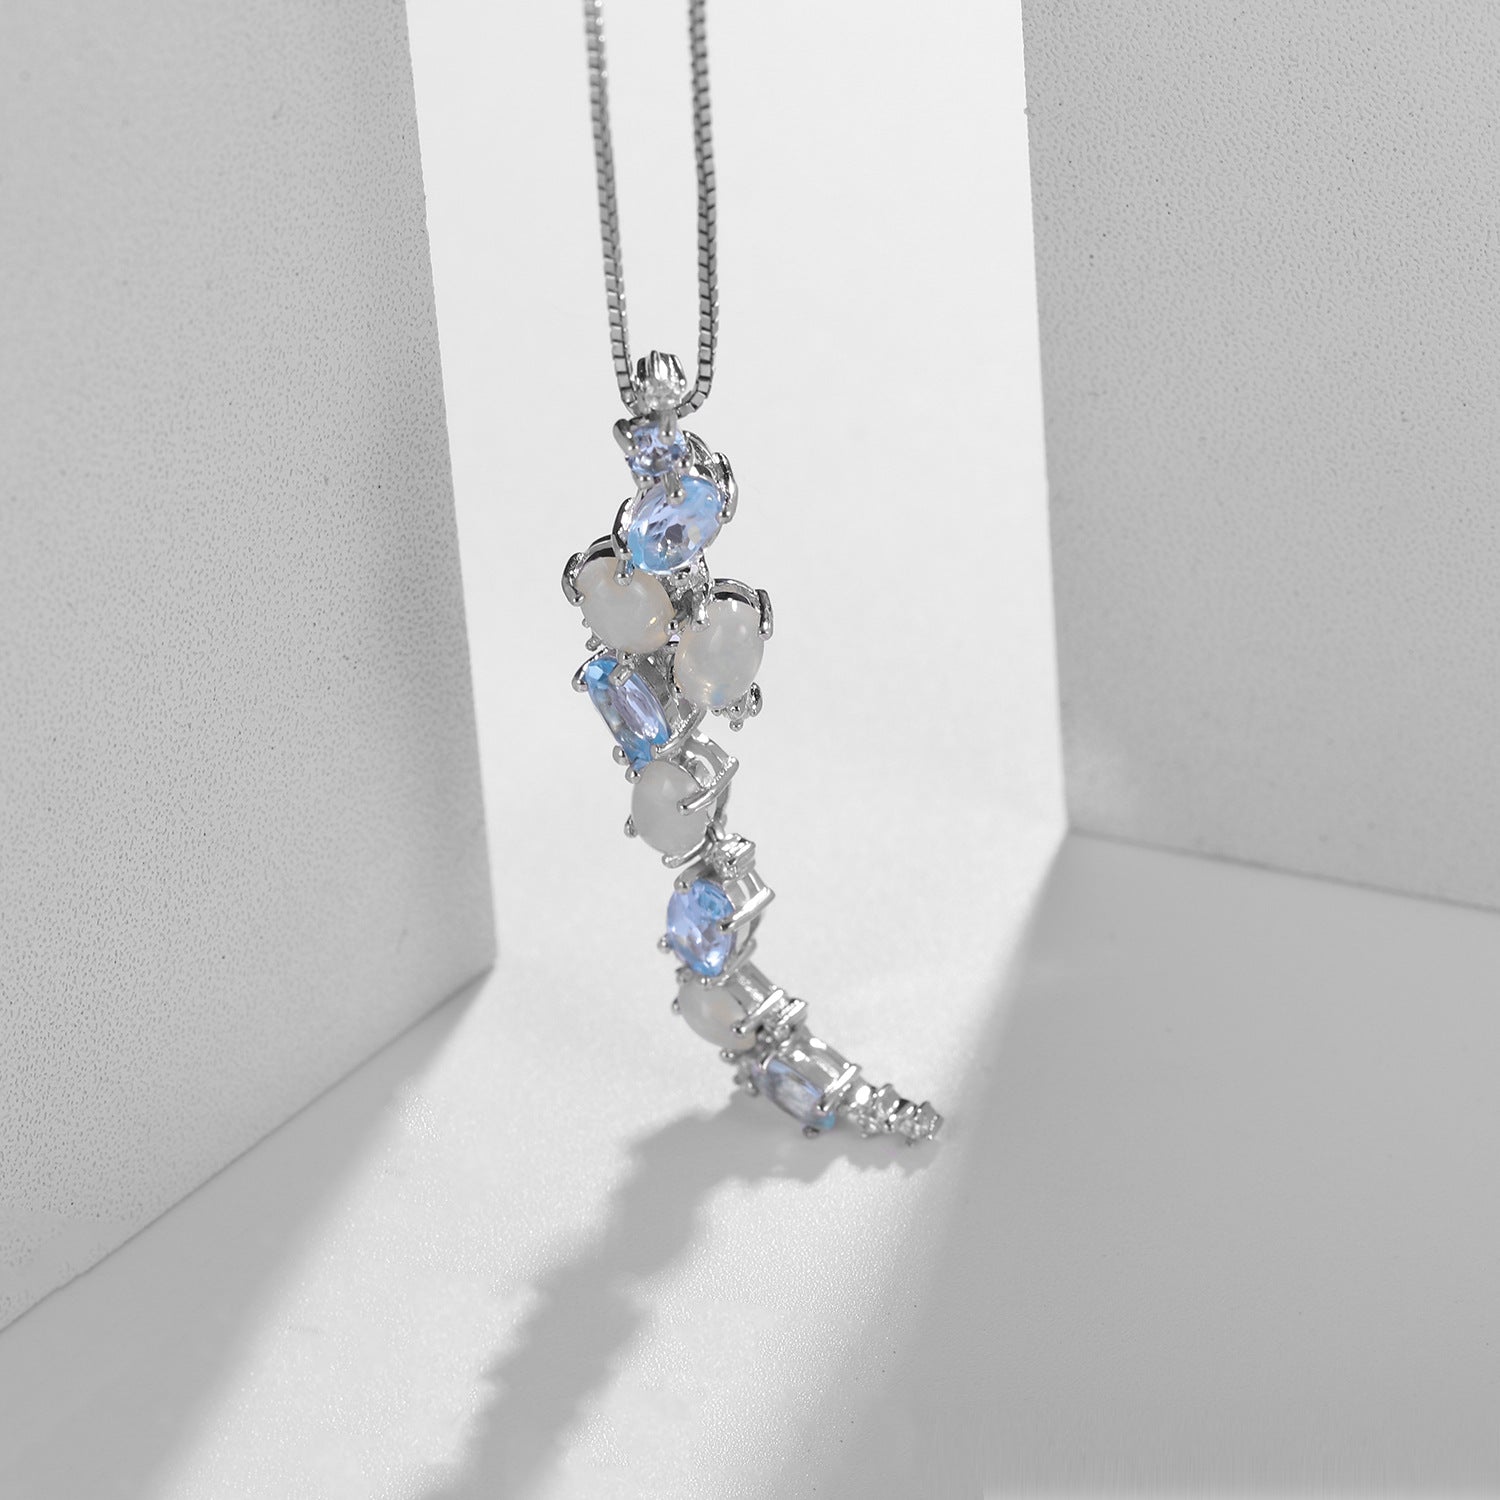 French Romantic Design Premium Natural Colourful Gemstone Pendulous Pendant Silver Necklace for Women